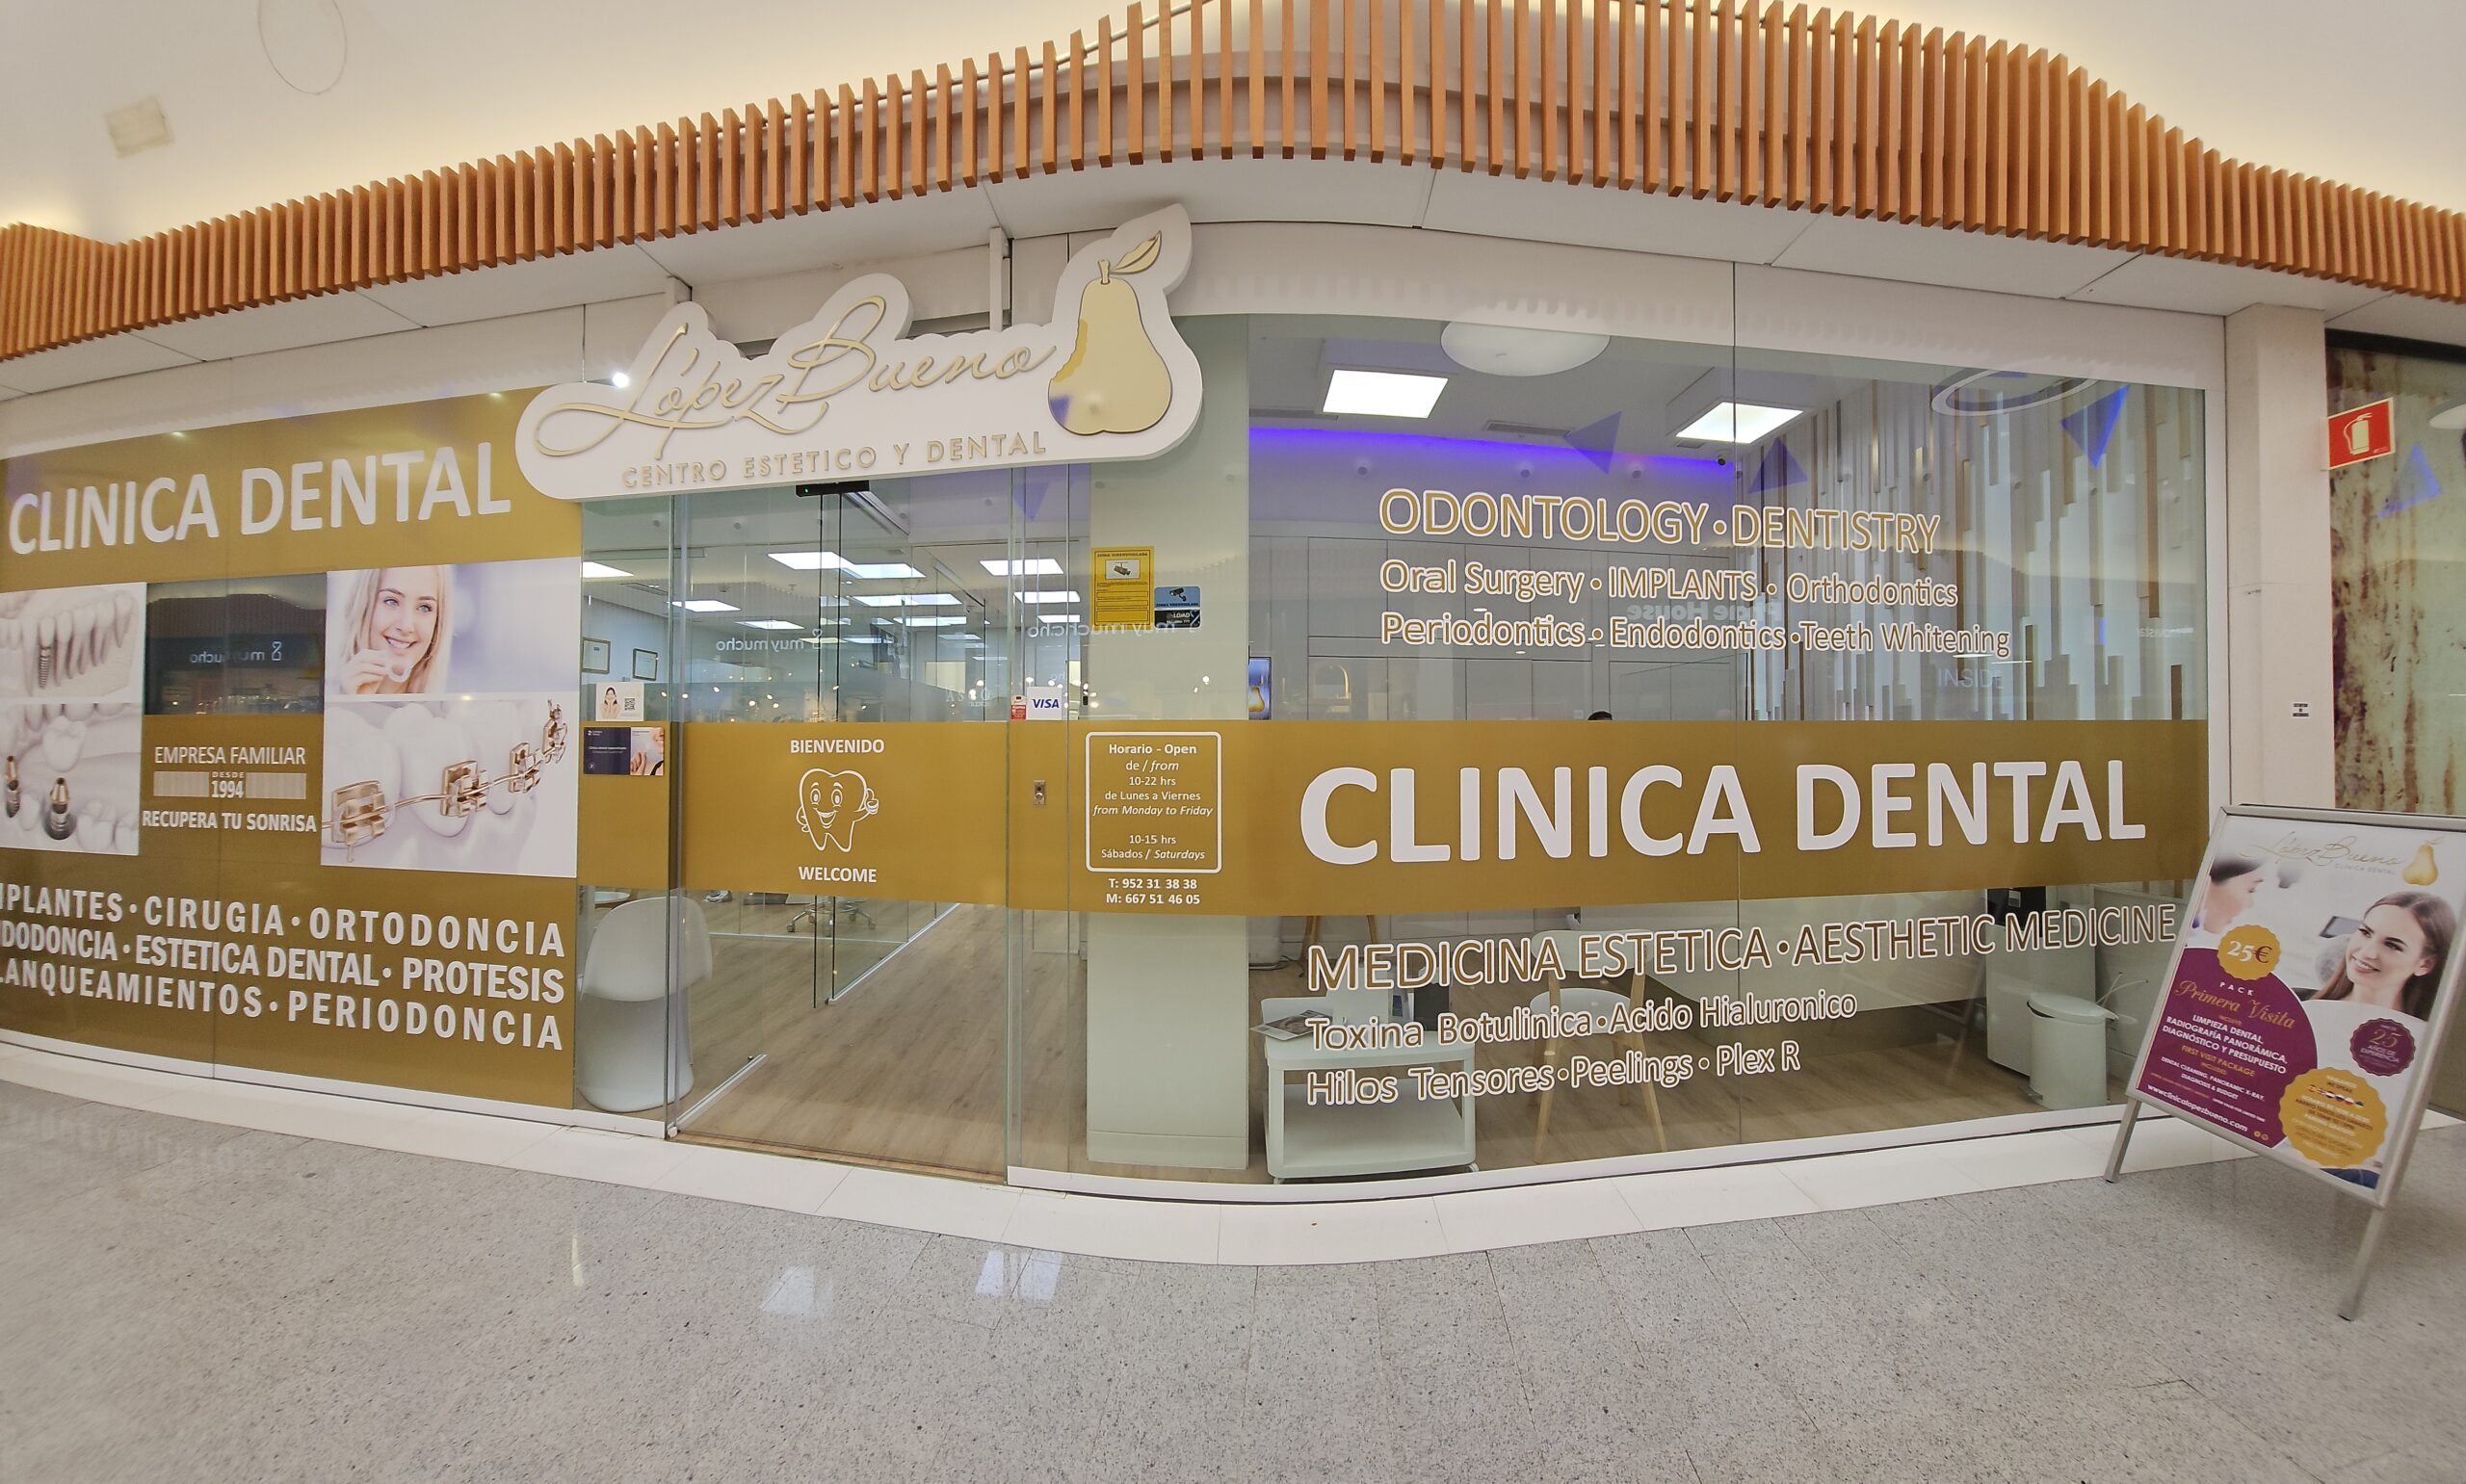 Clínica dental en Málaga